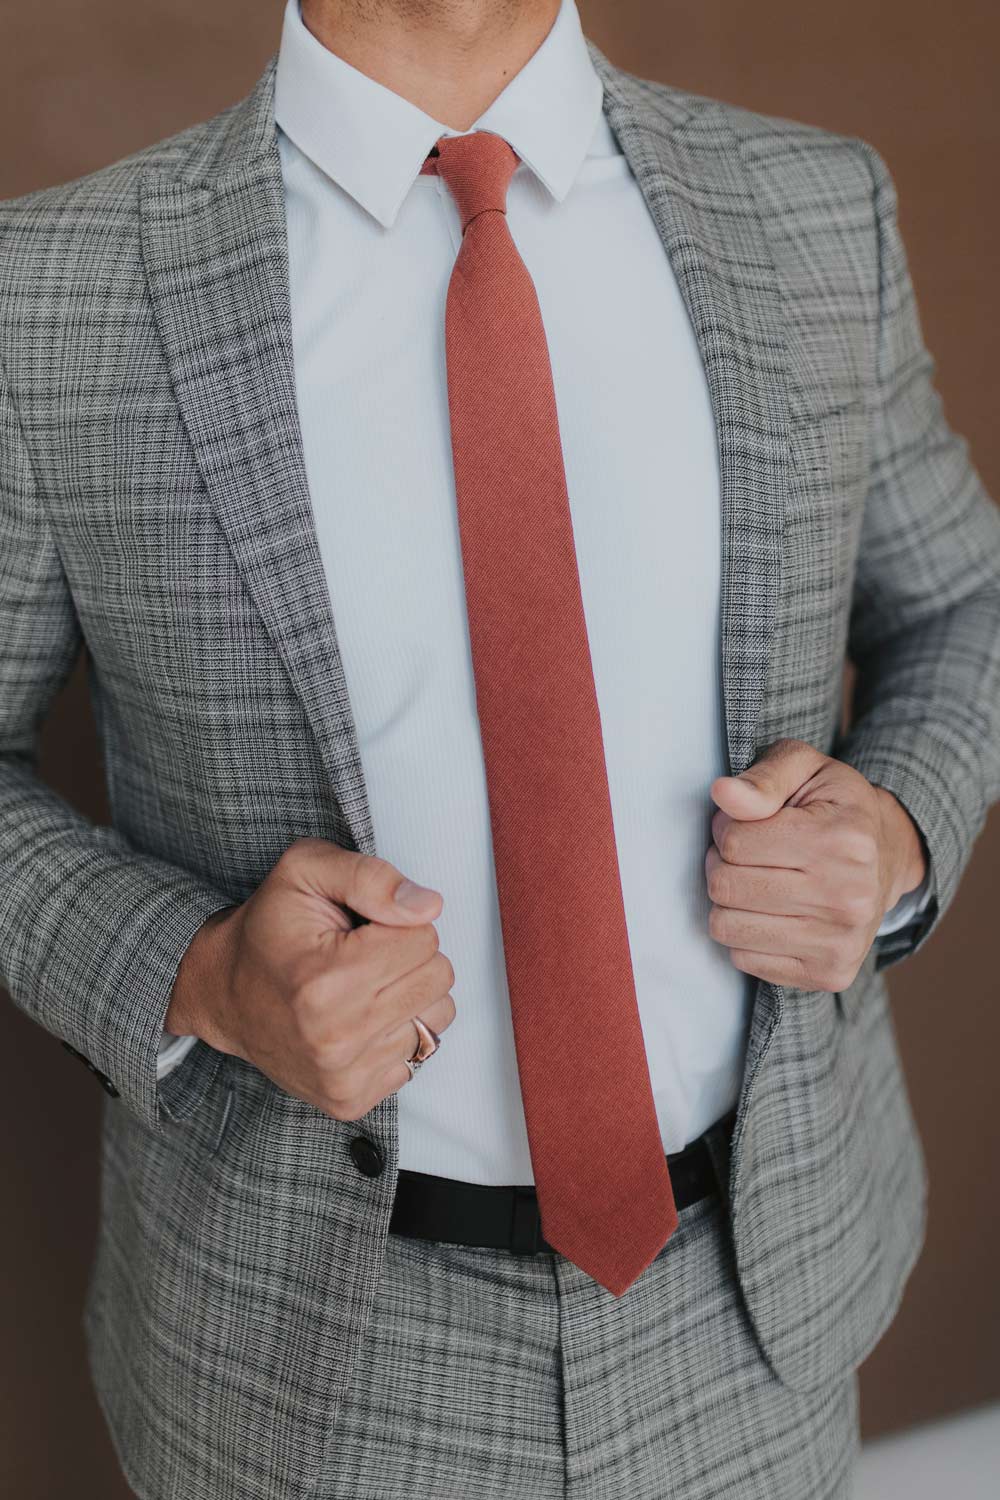 DAZI - Frosted Morning - Skinny Tie